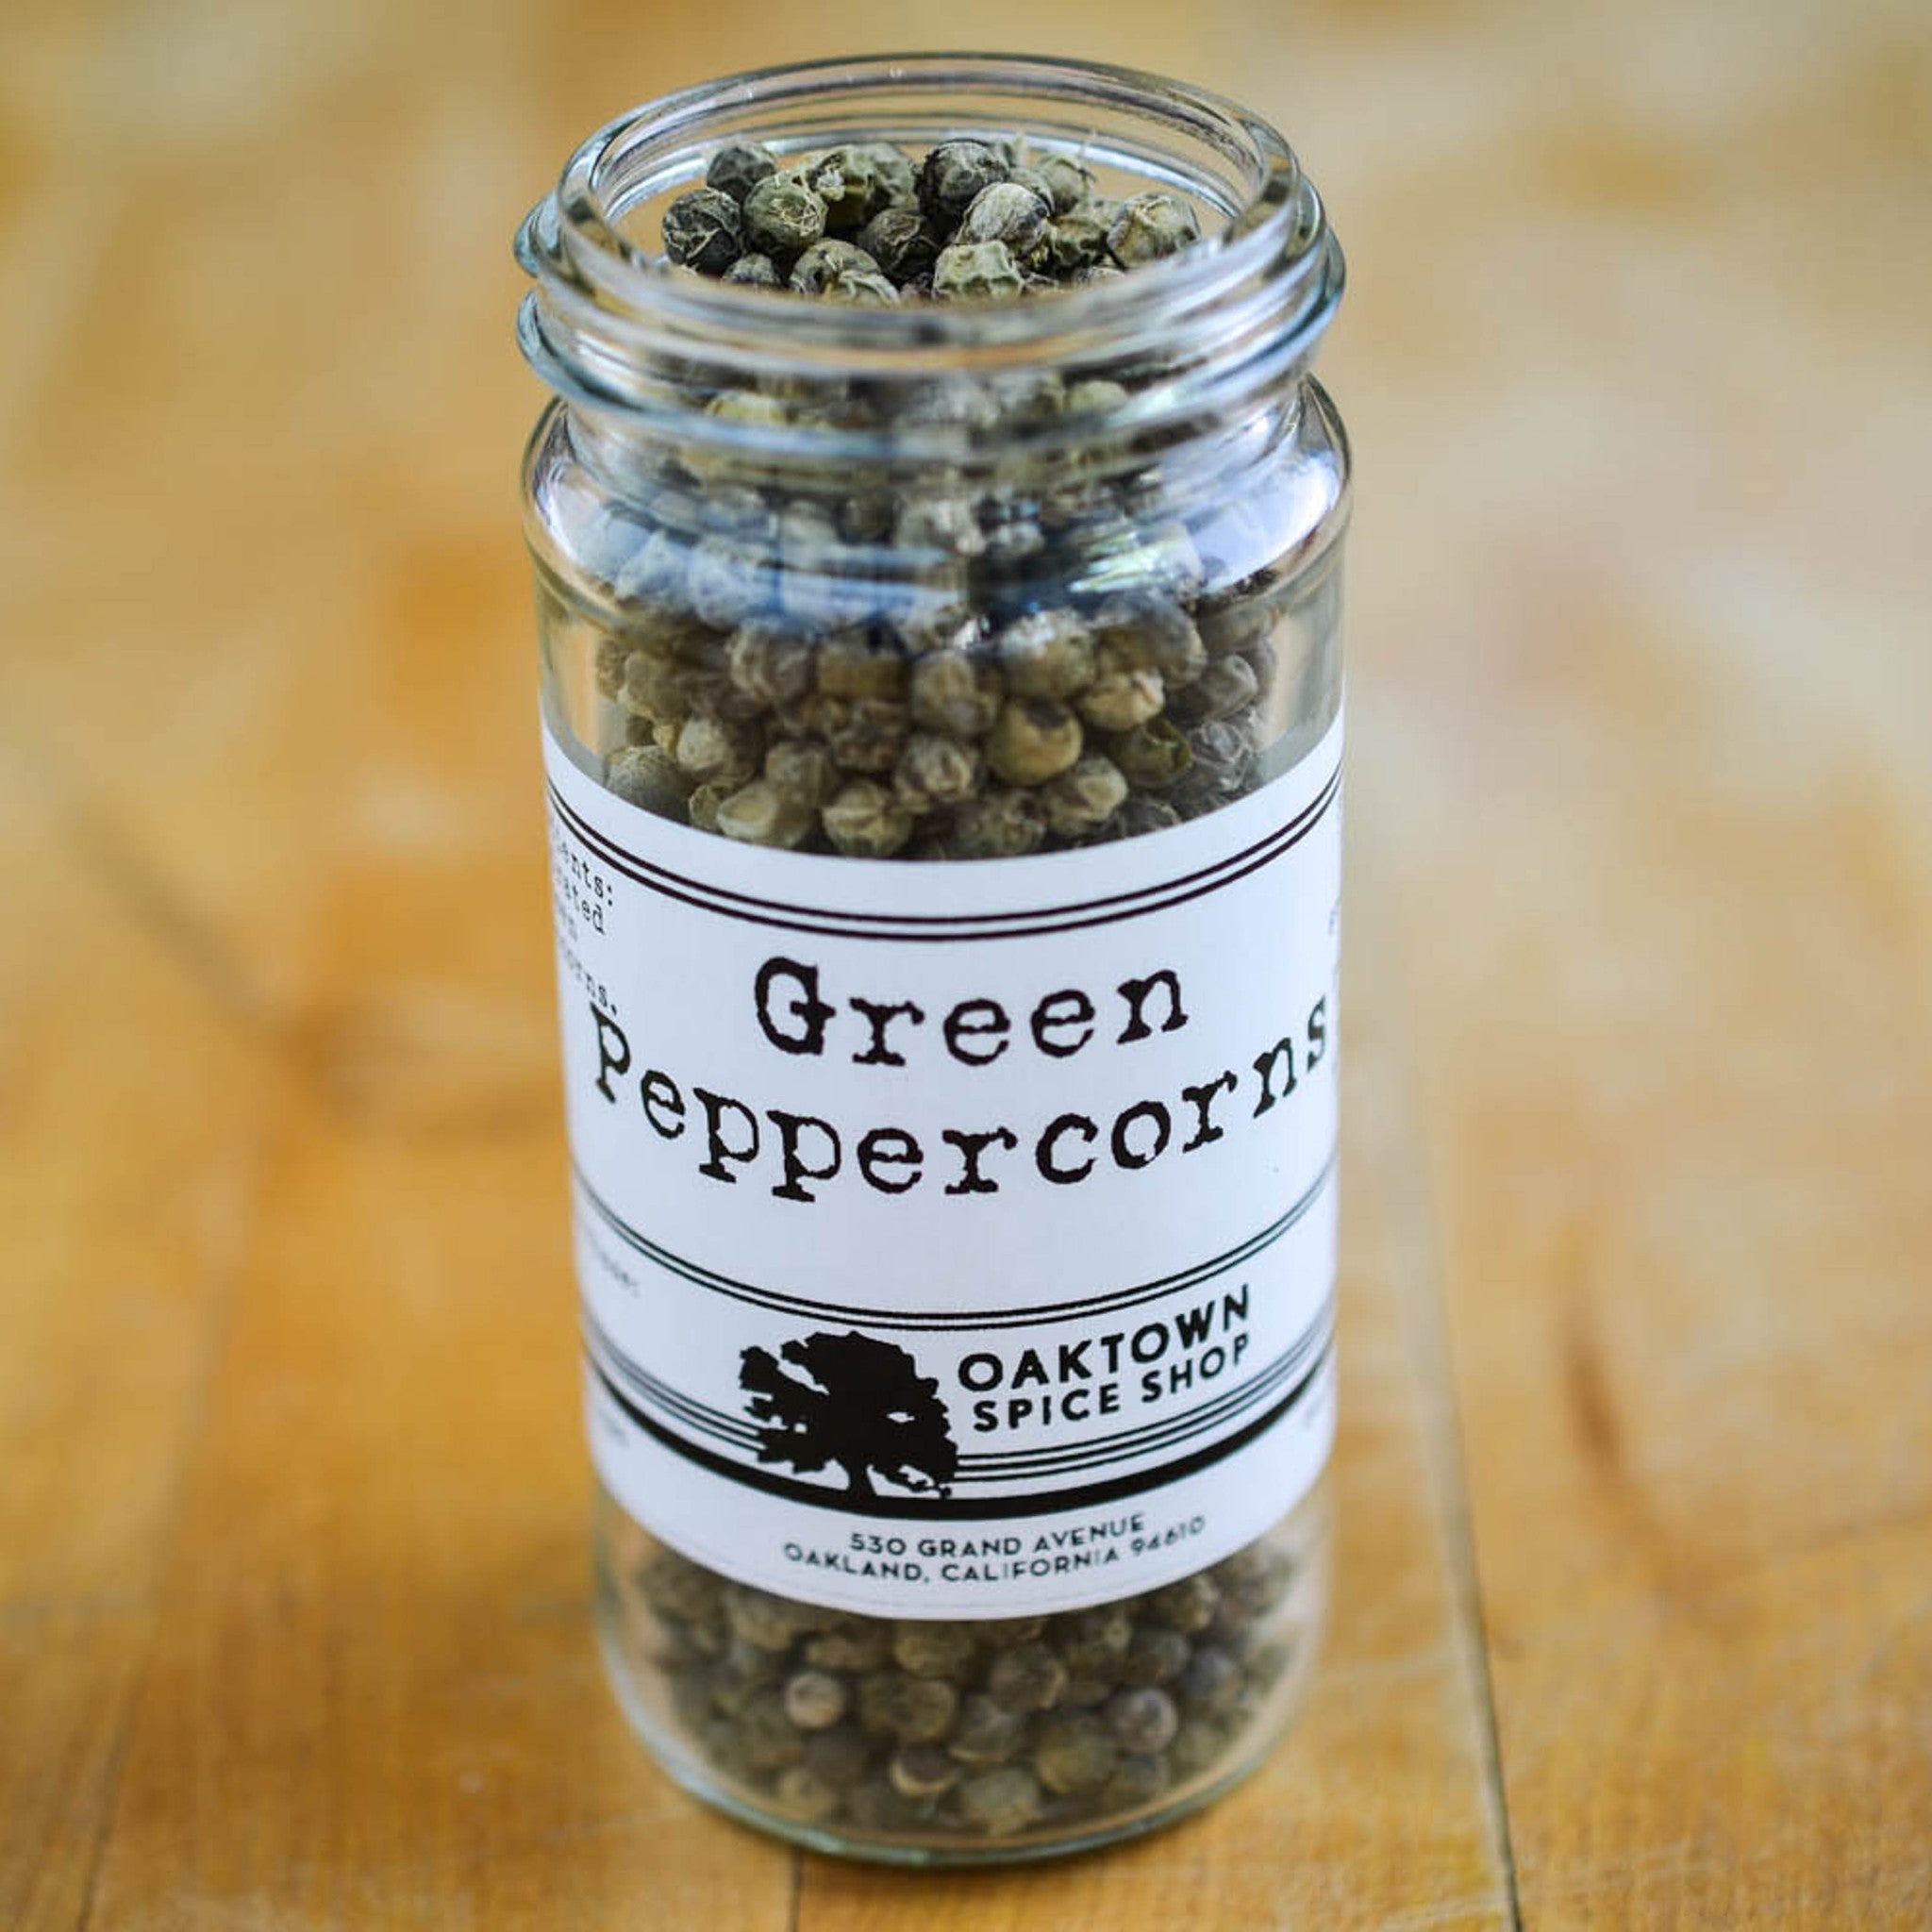 Whole Green Peppercorns from Oaktown Spice Shop.